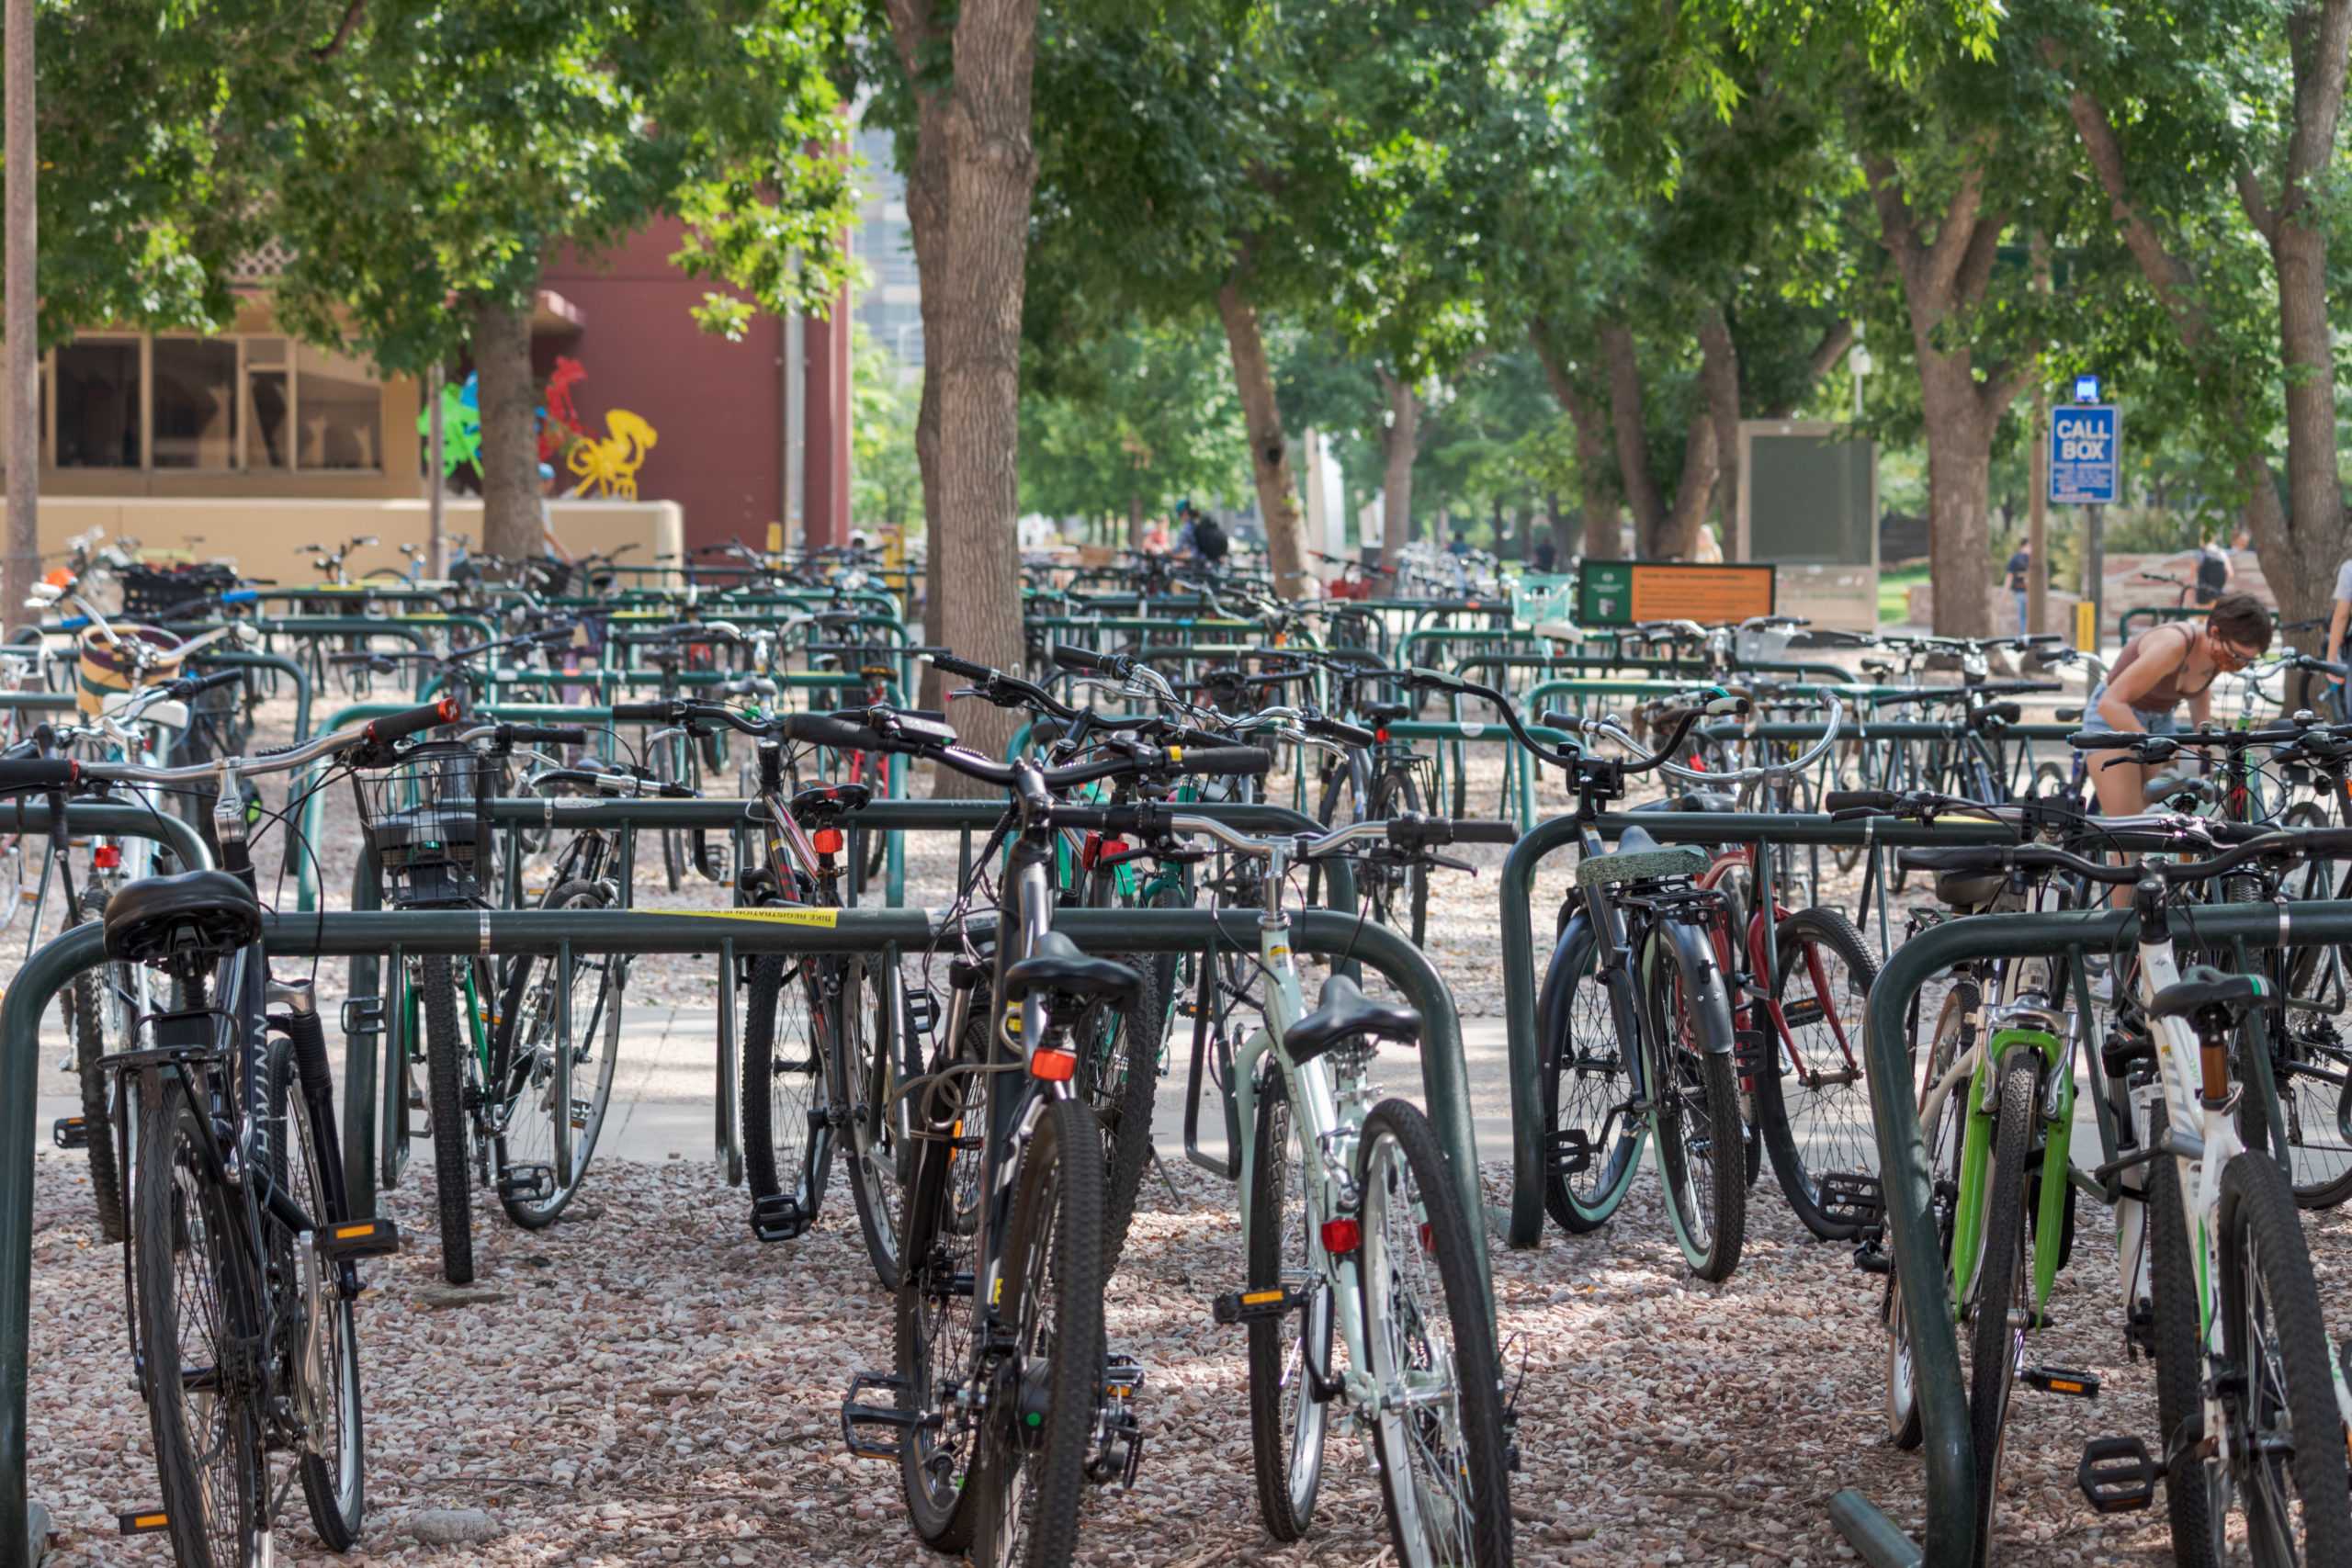 Bicycles sit in a bike rack